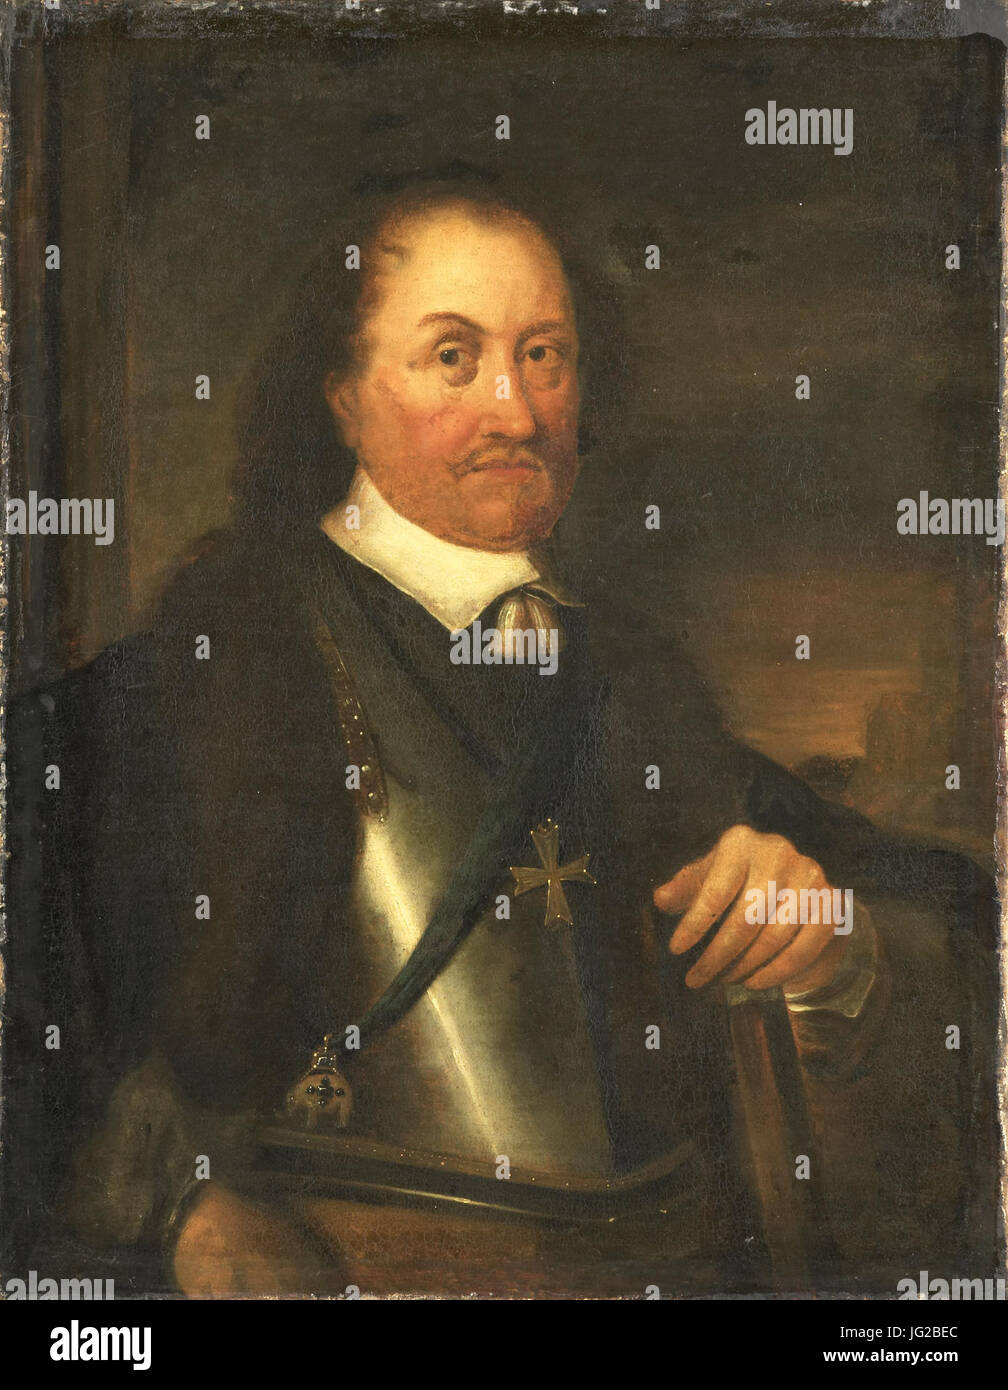 Johan Maurits (1604-97), graaf van Nassau-Siegen. Gouverneur van Brazilië Rijksmuseum SK-A-2967 Stock Photo